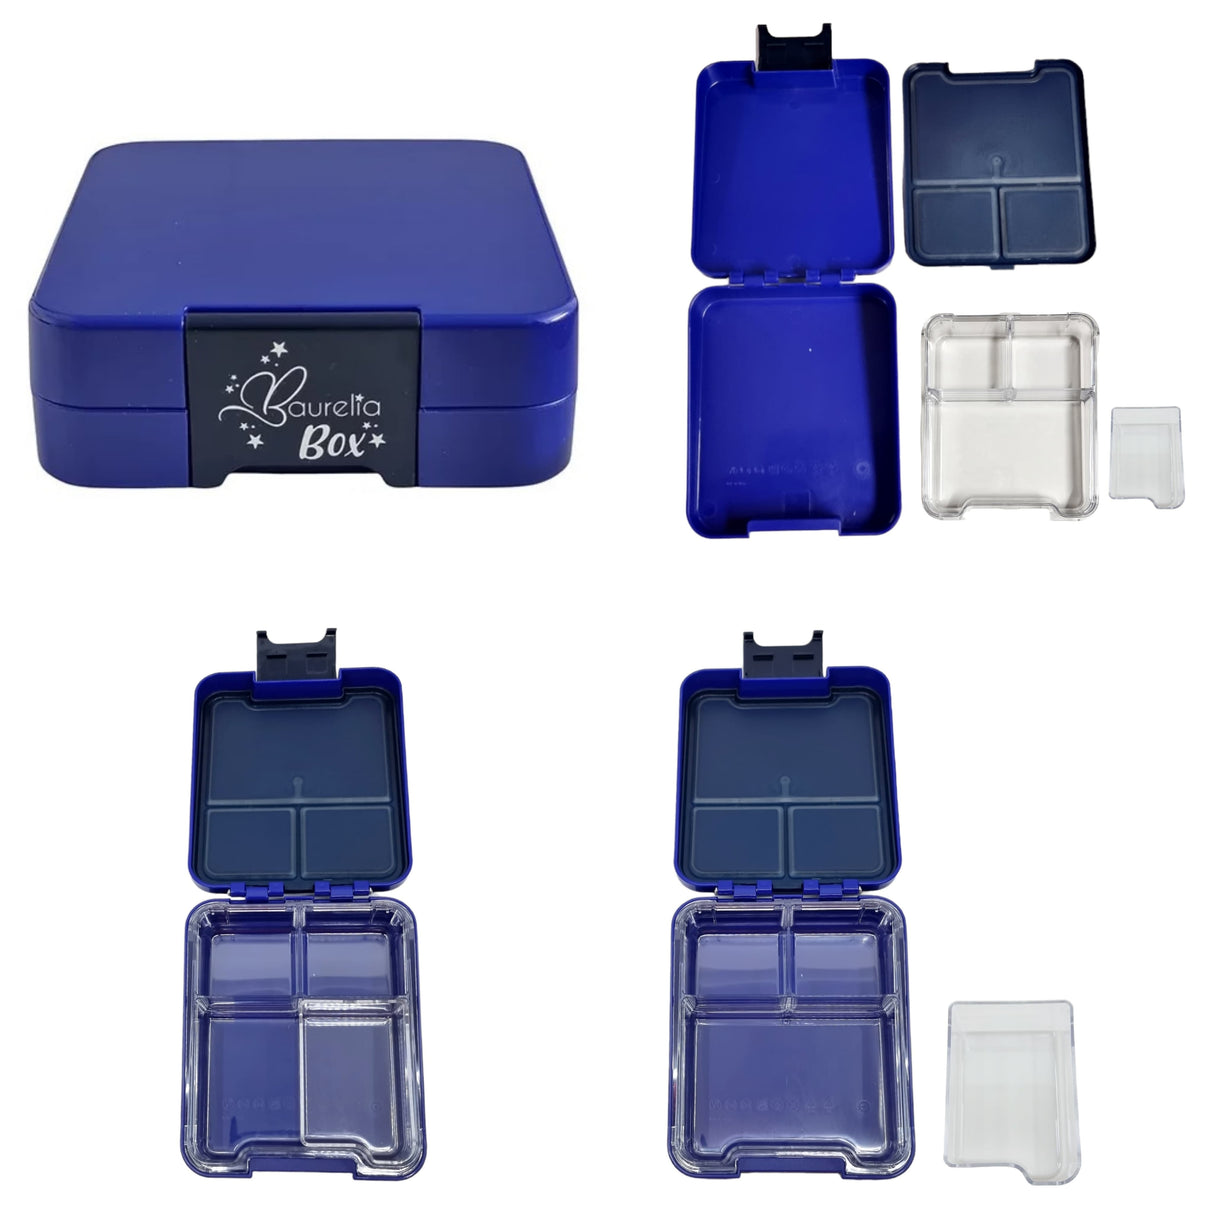 SET Znünibox und Trinkflasche Baurelia Box Midi mit Kambukka 500ml Blau